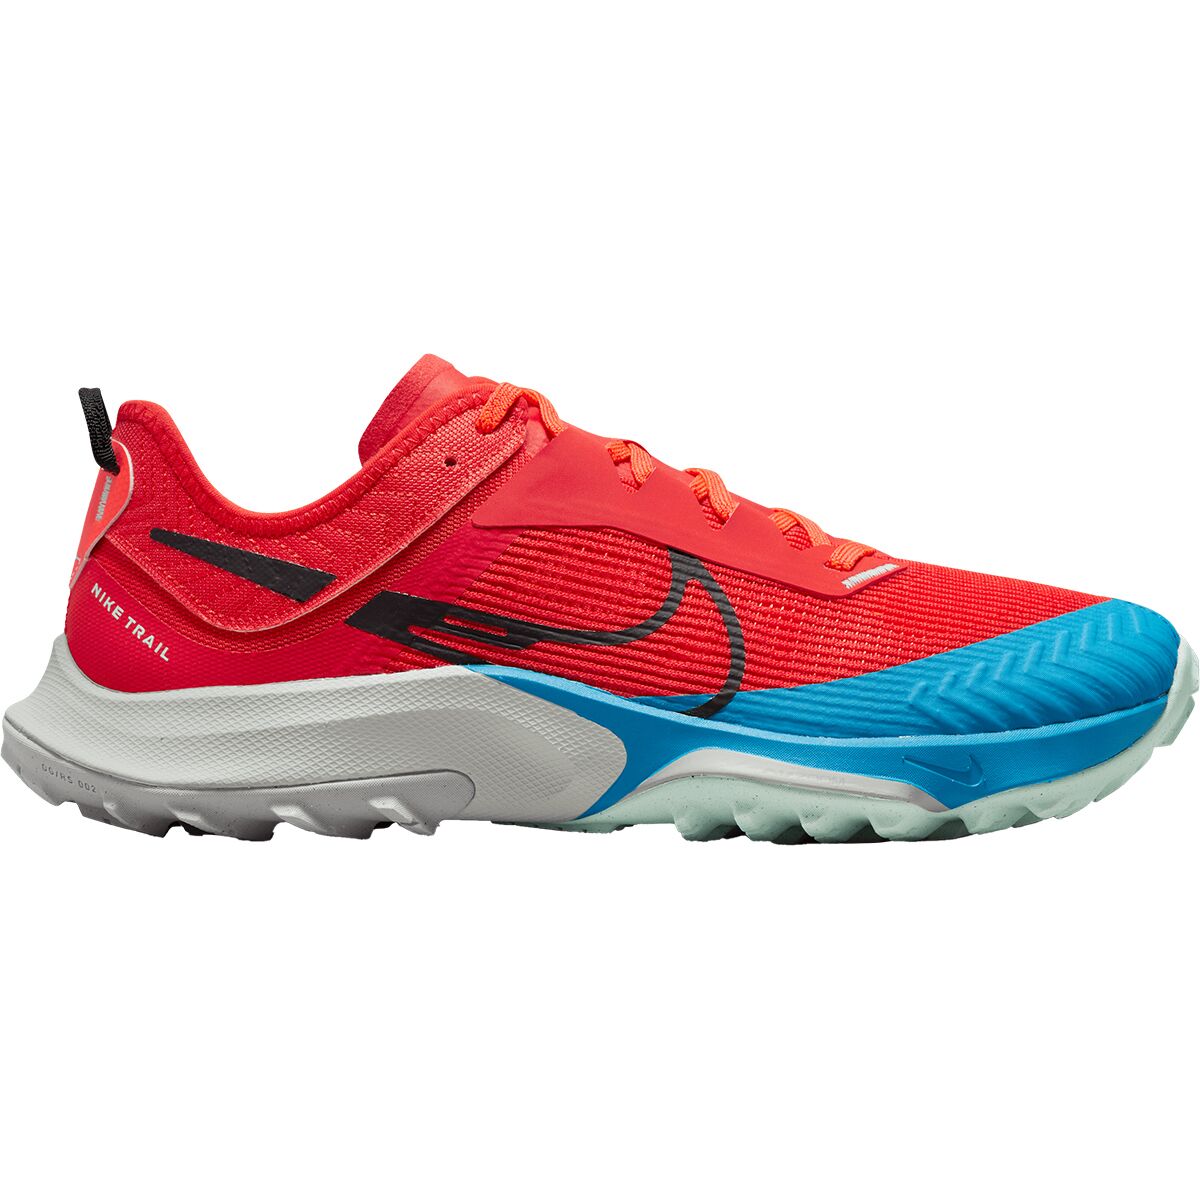 Nike Air Zoom Terra Kiger 8 Trail Running Shoe - Men's